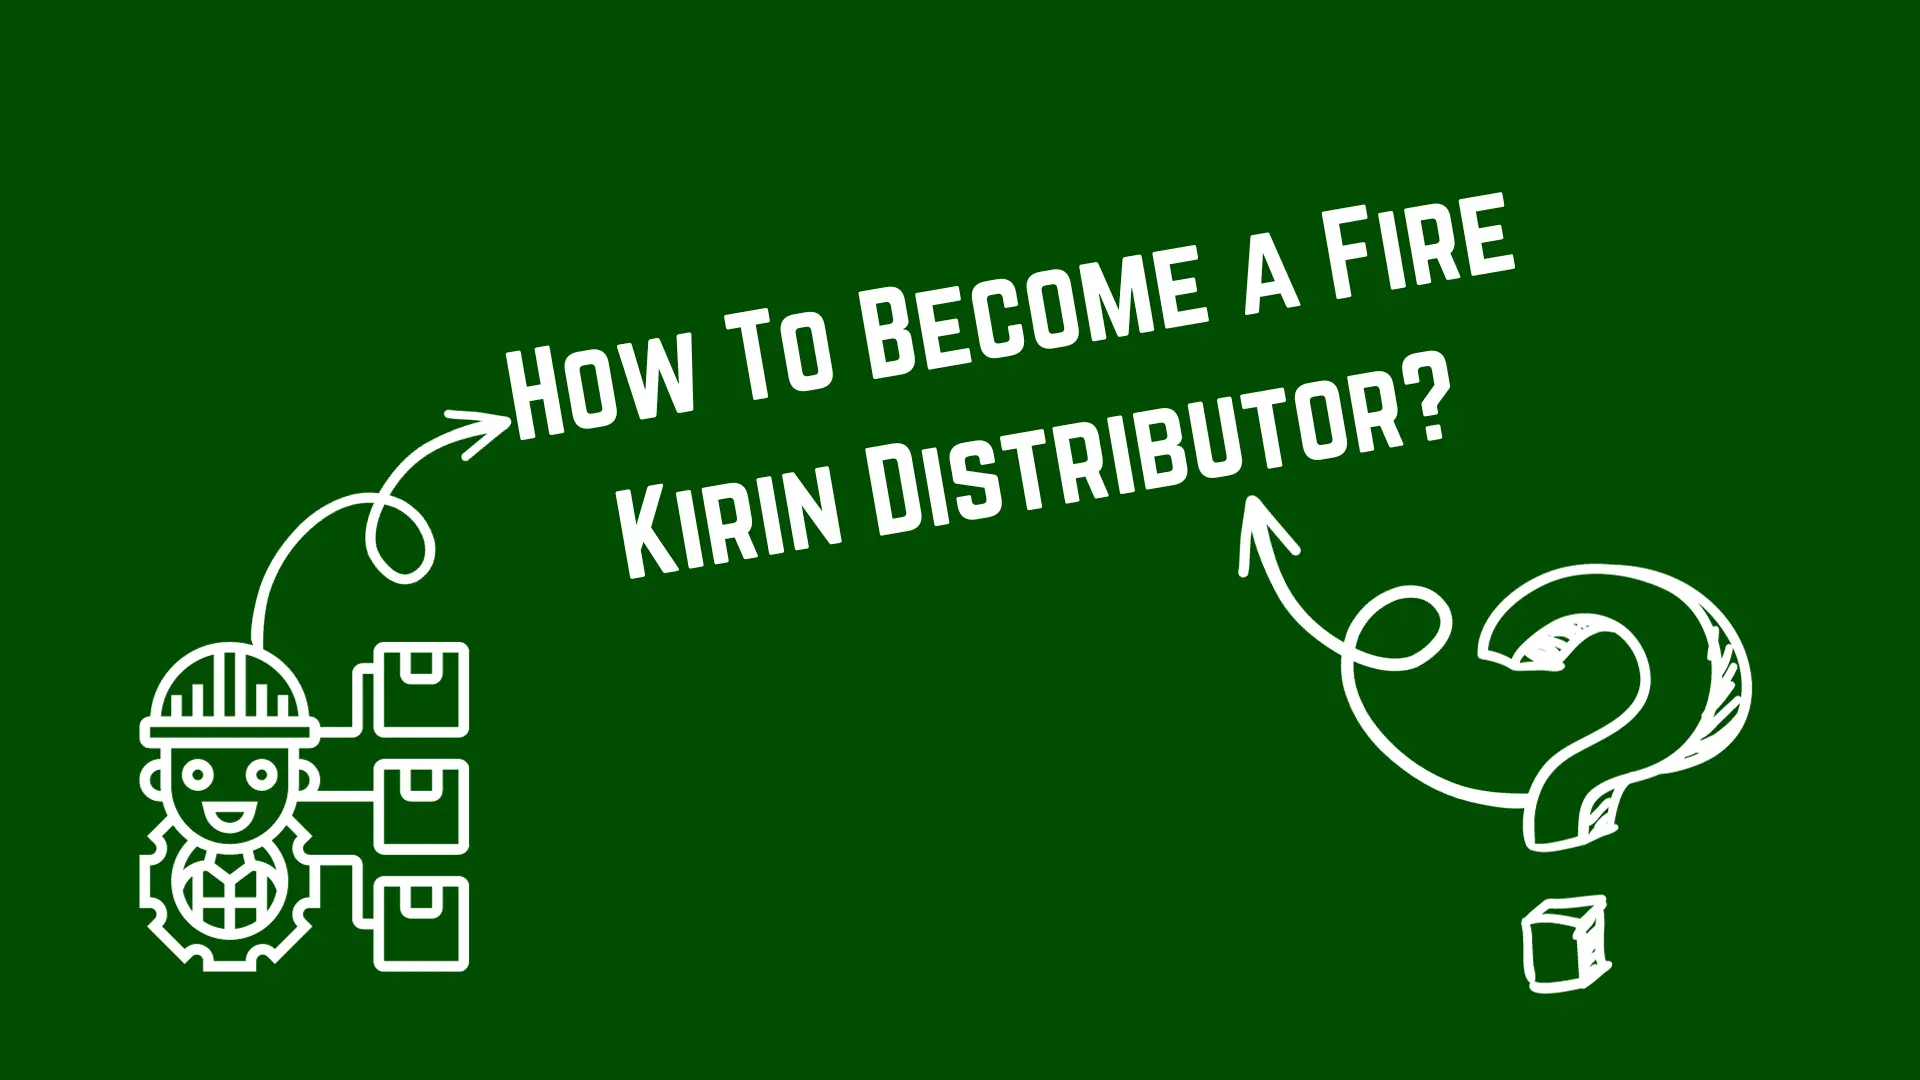 How To Become a Fire Kirin Distributor